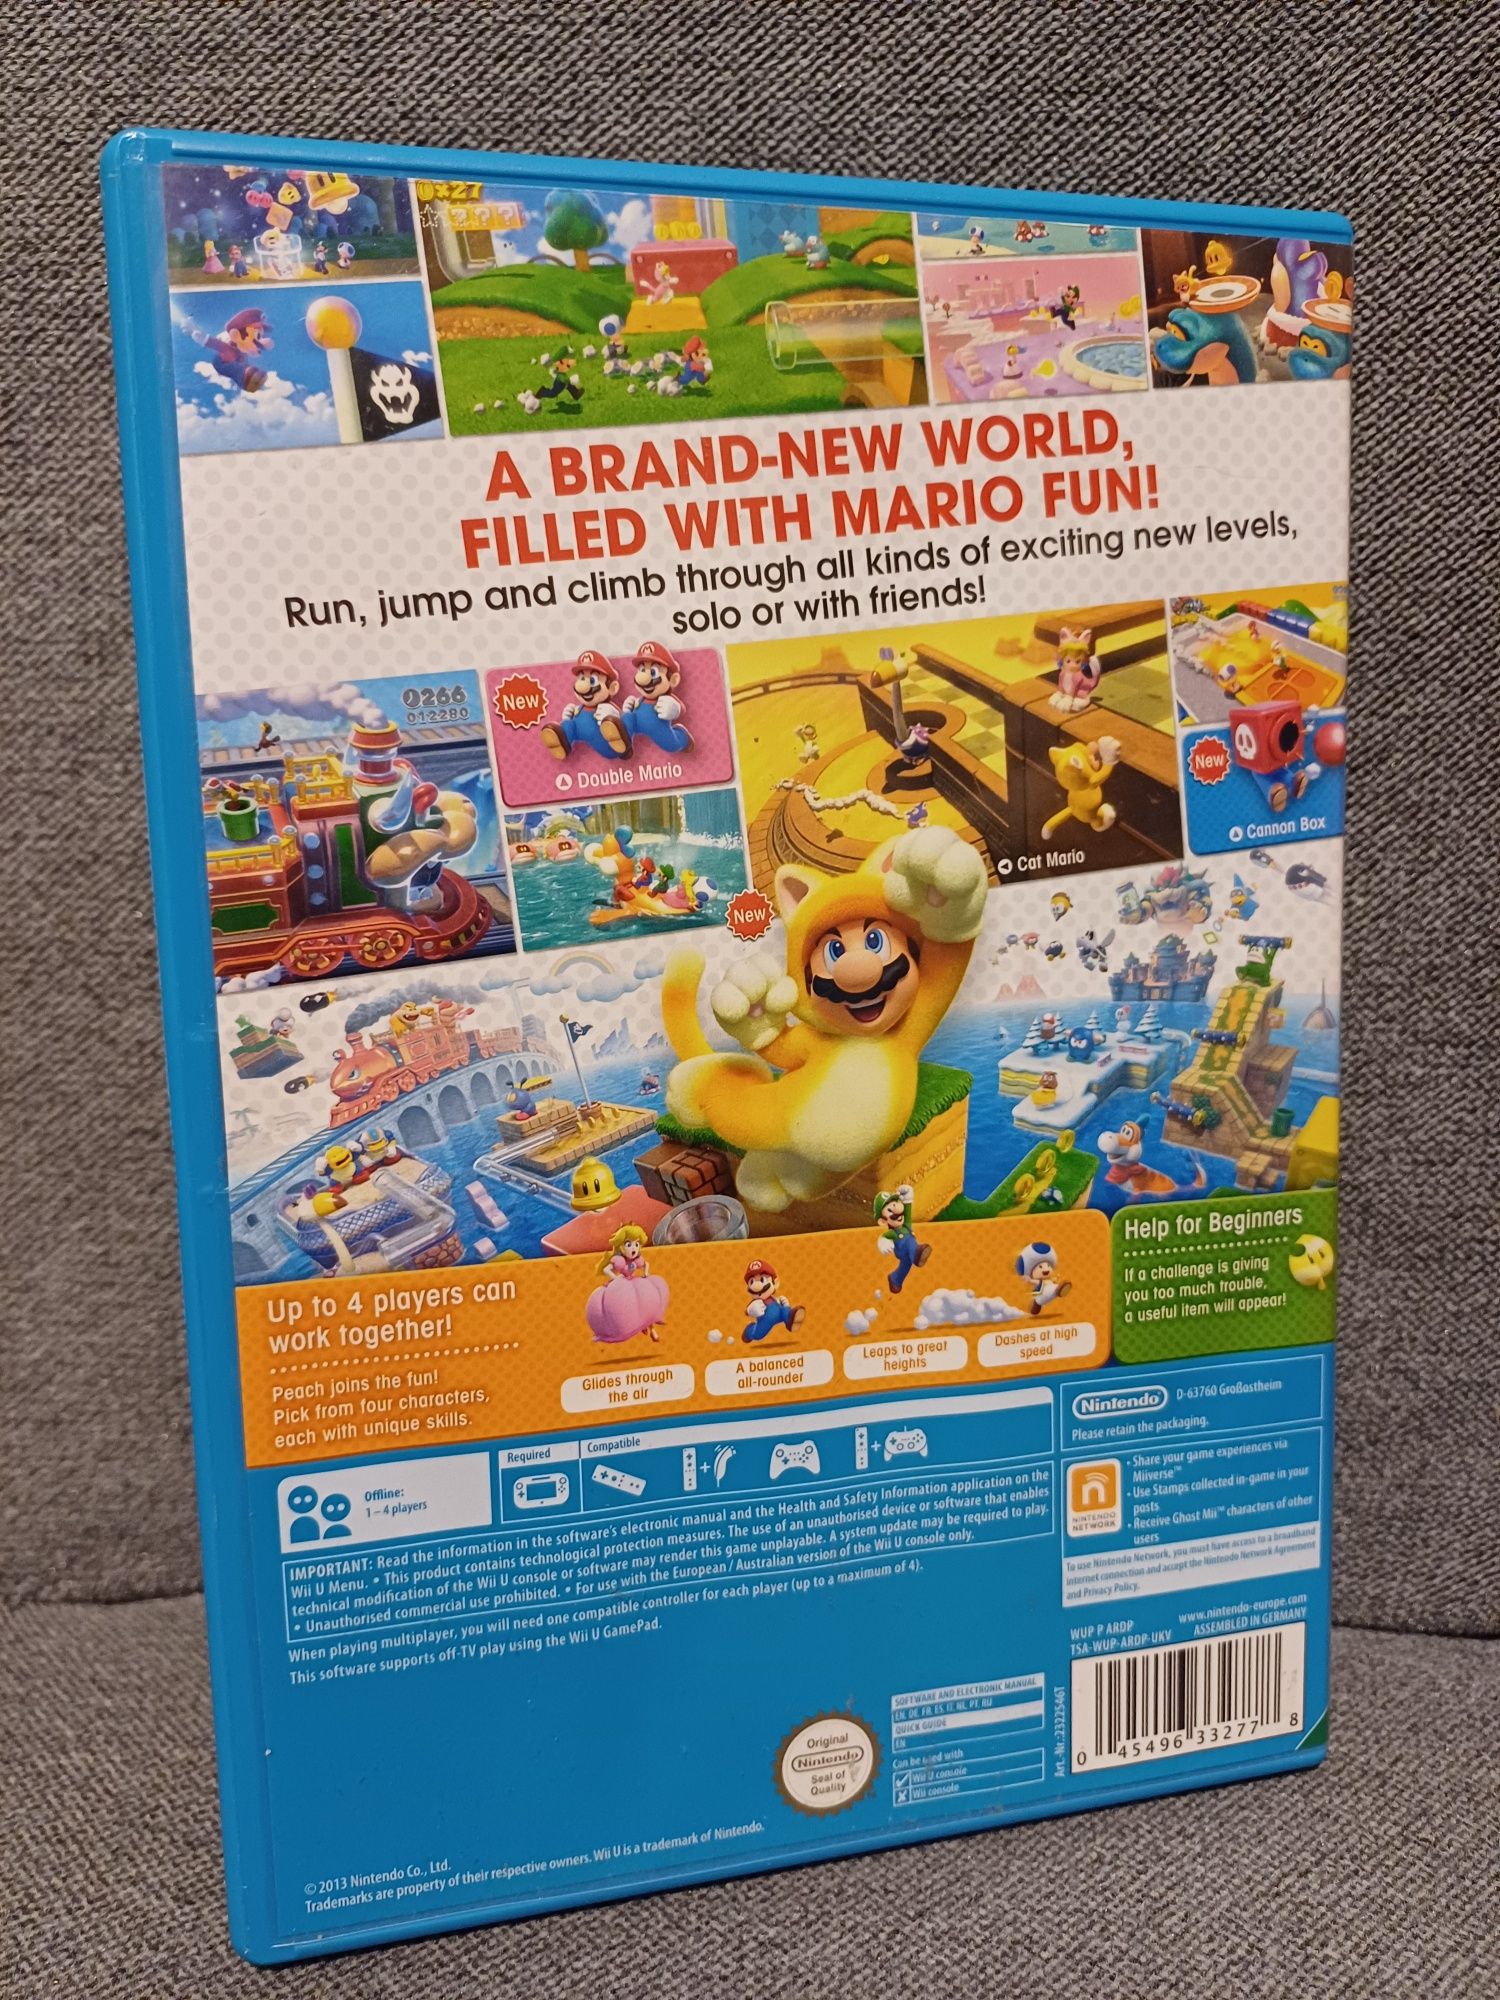 Super Mario 3D World Nintendo WiiU angielska bdb stan